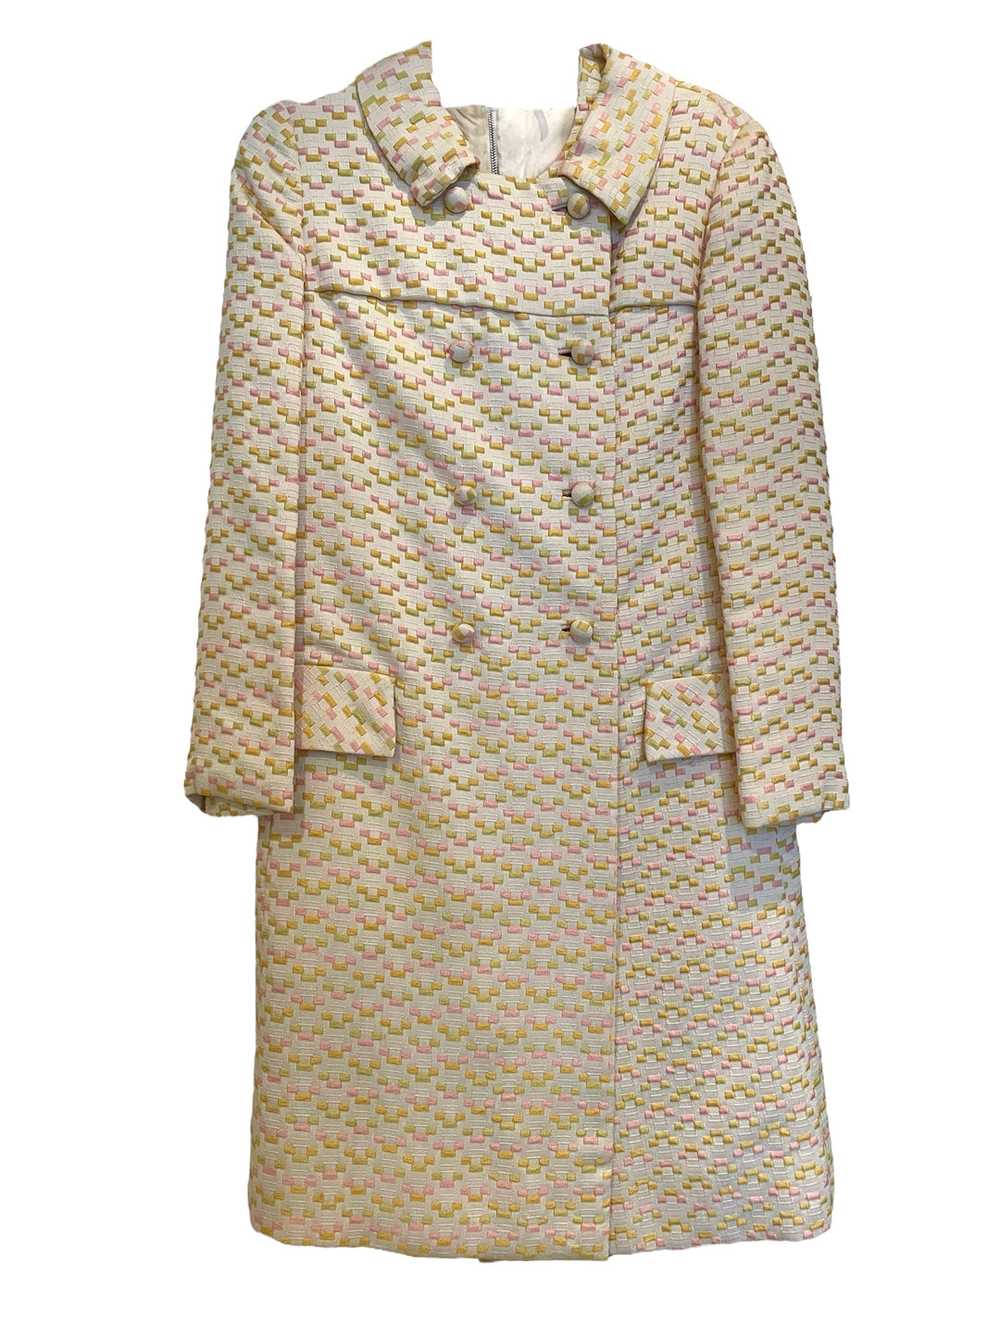 Silk Shift Dress with Matching Coat - image 1